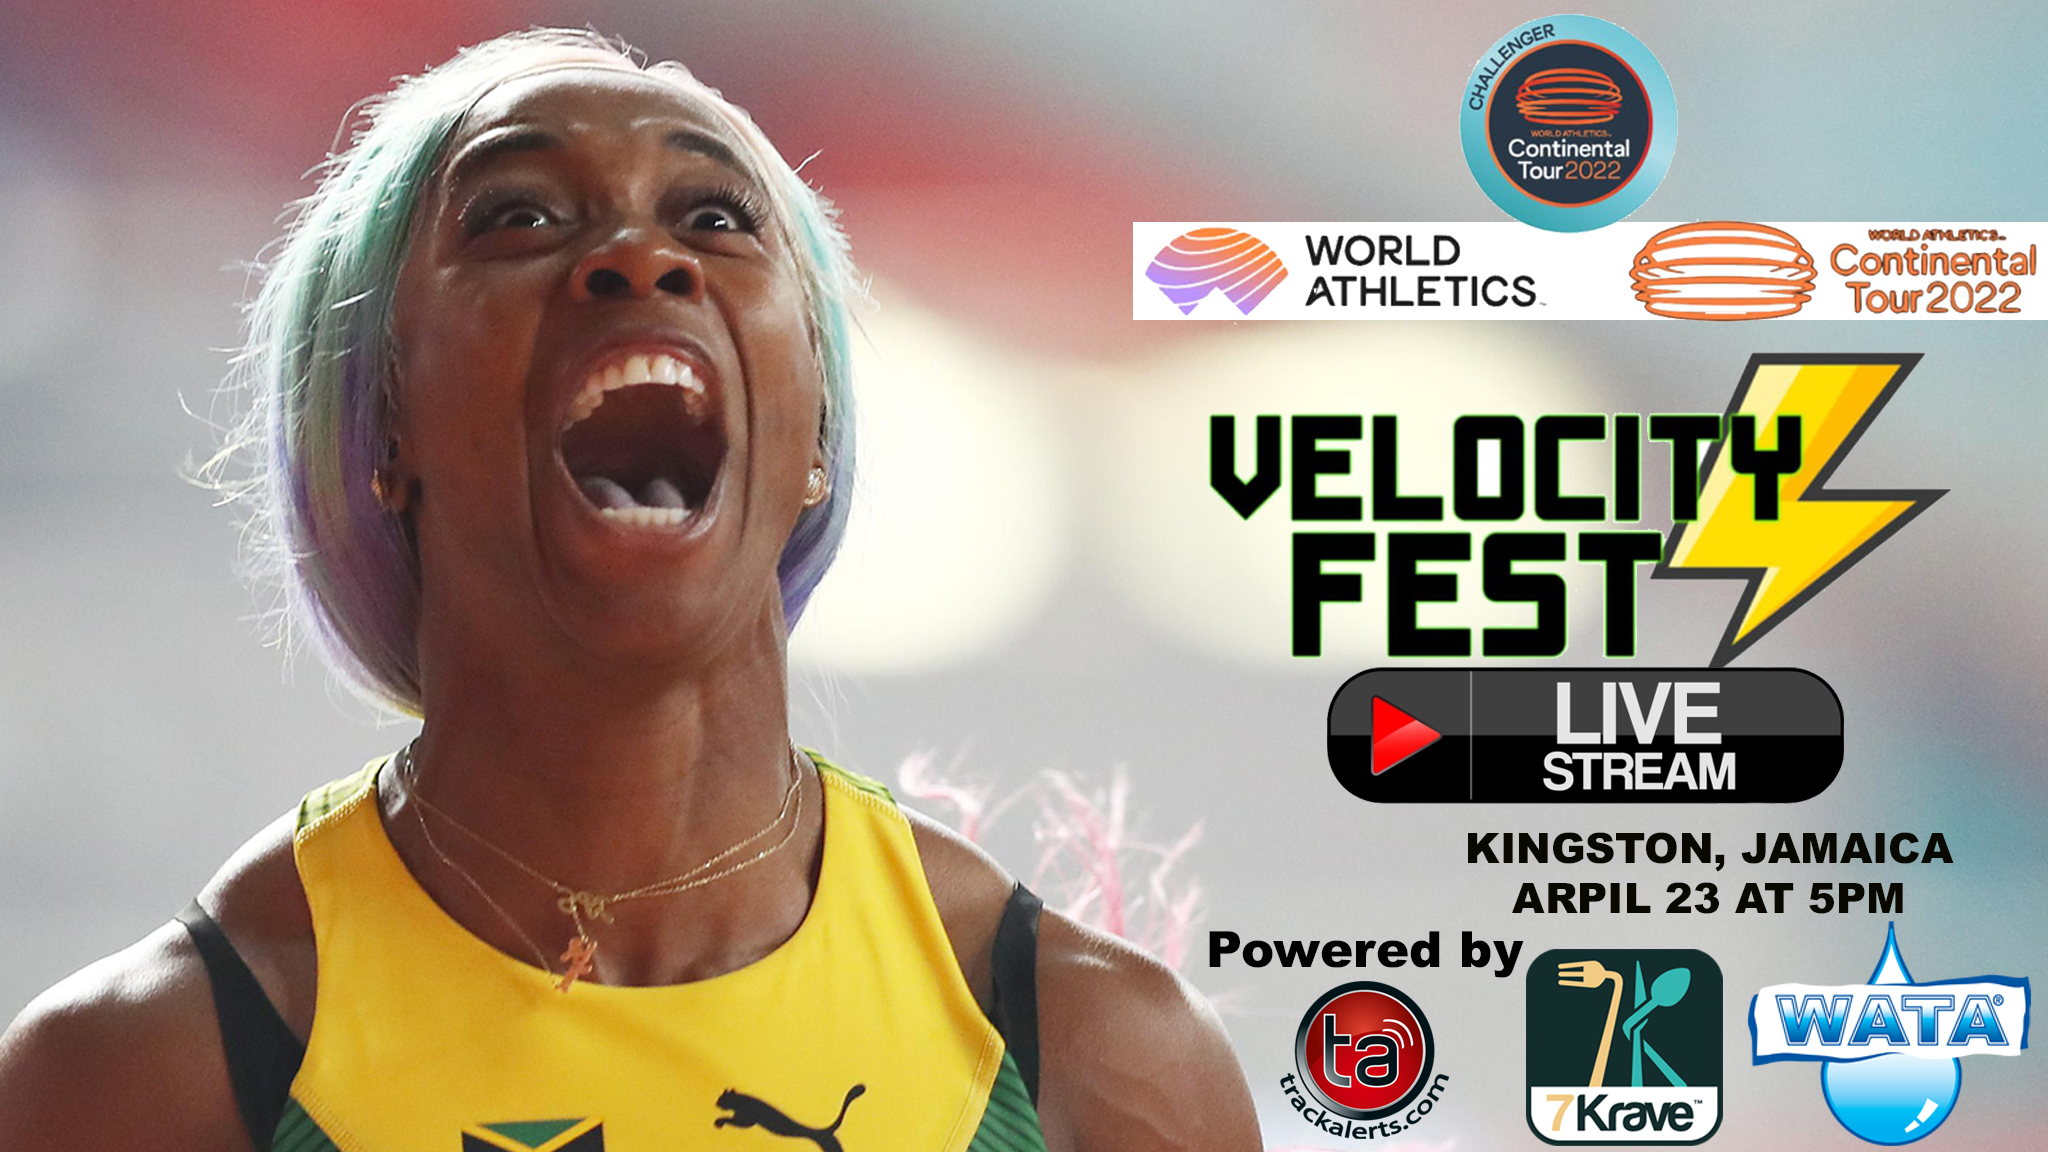 Velocity Fest Live Stream